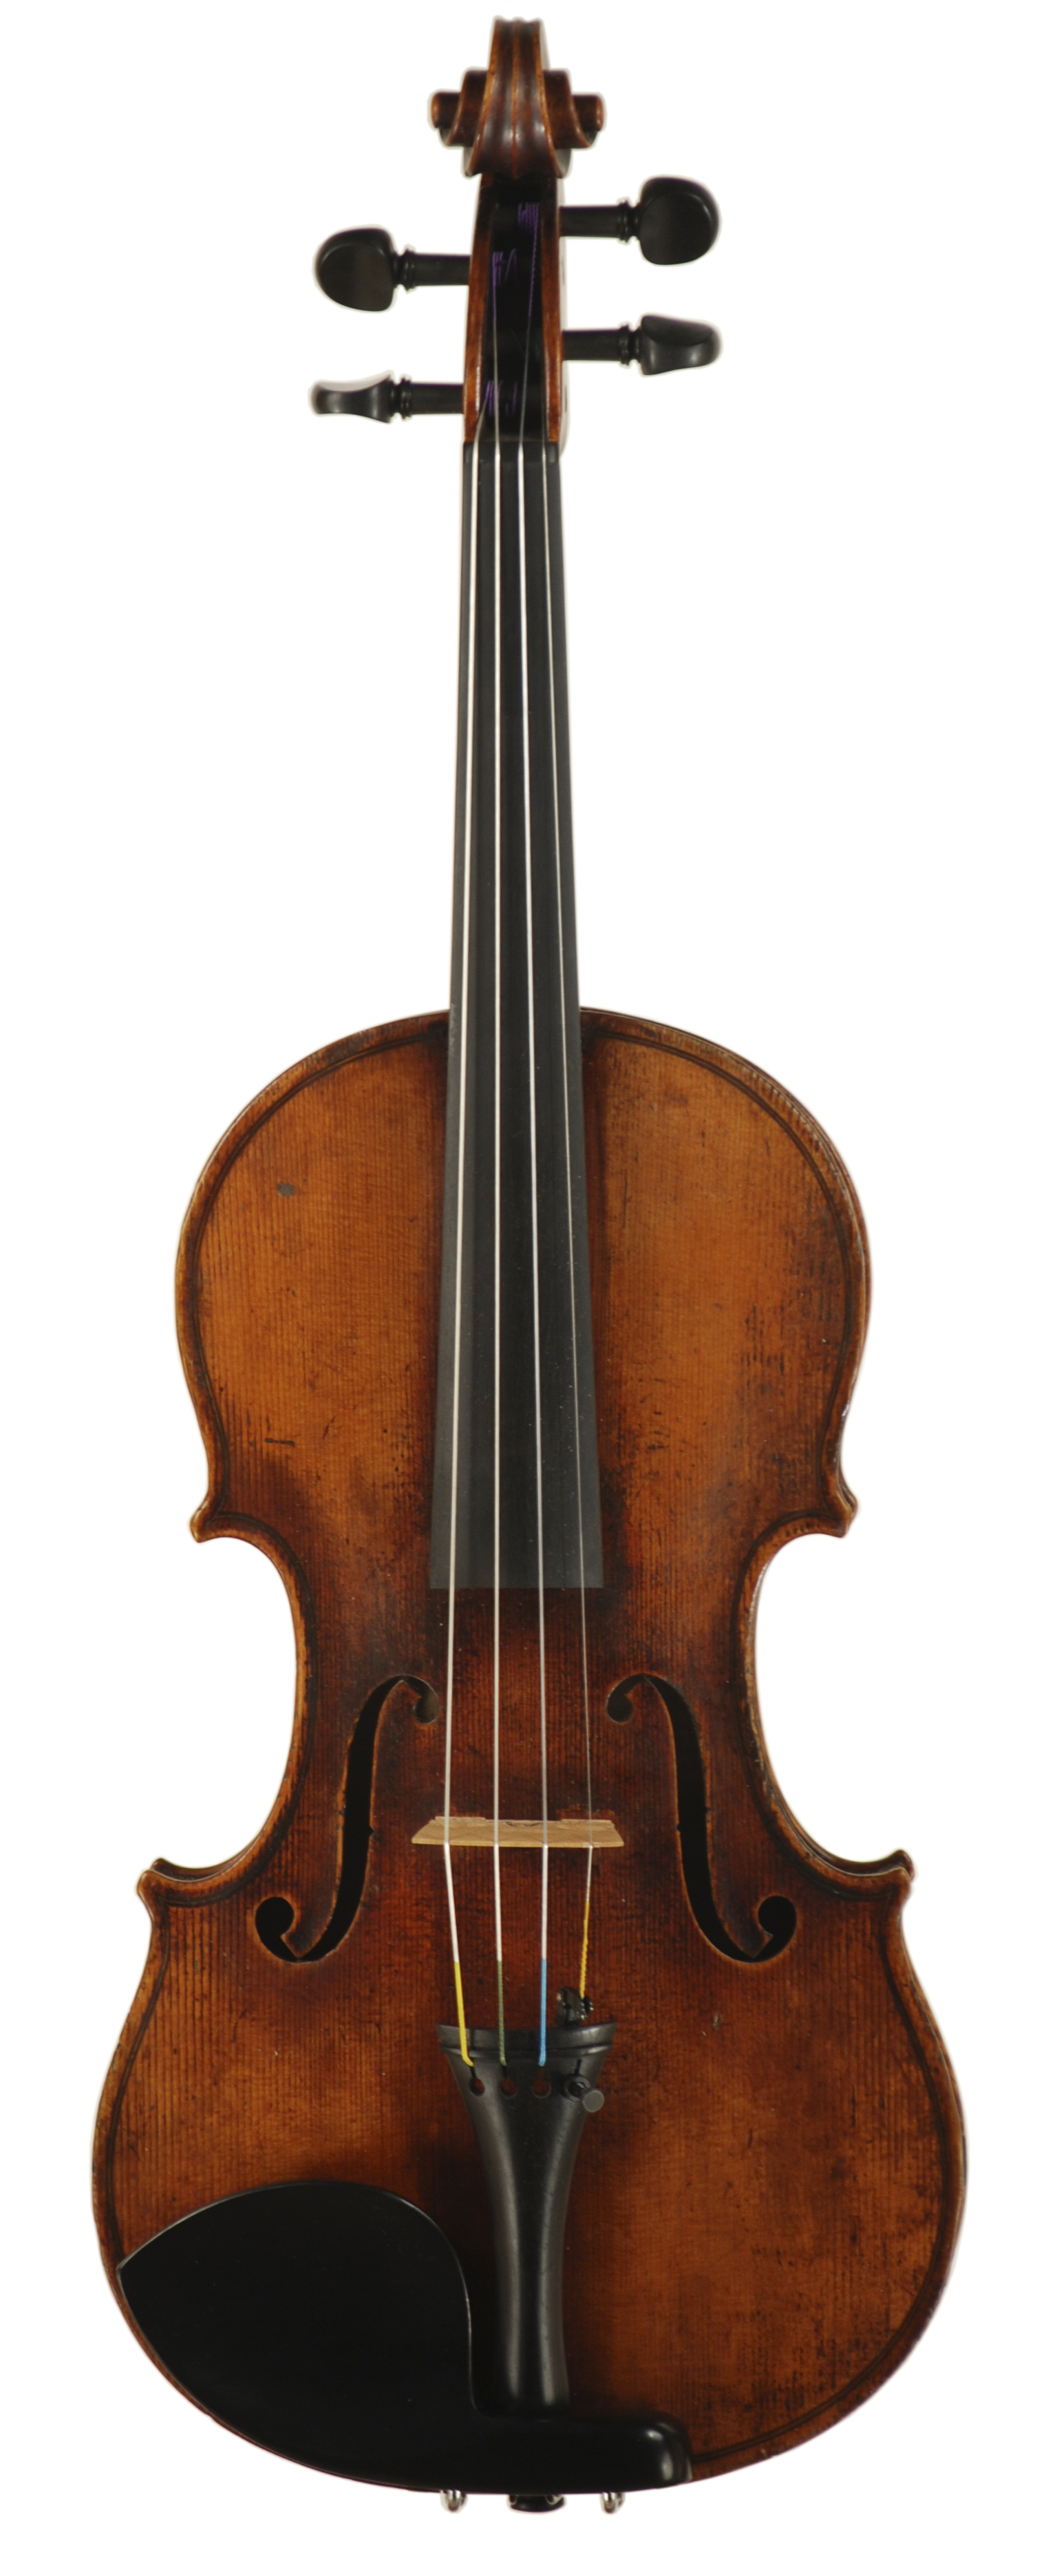 Highest Grade Markneukirchen Violin, Circa 1860-70's -Fantastic Sound! J.R. Judd Violins